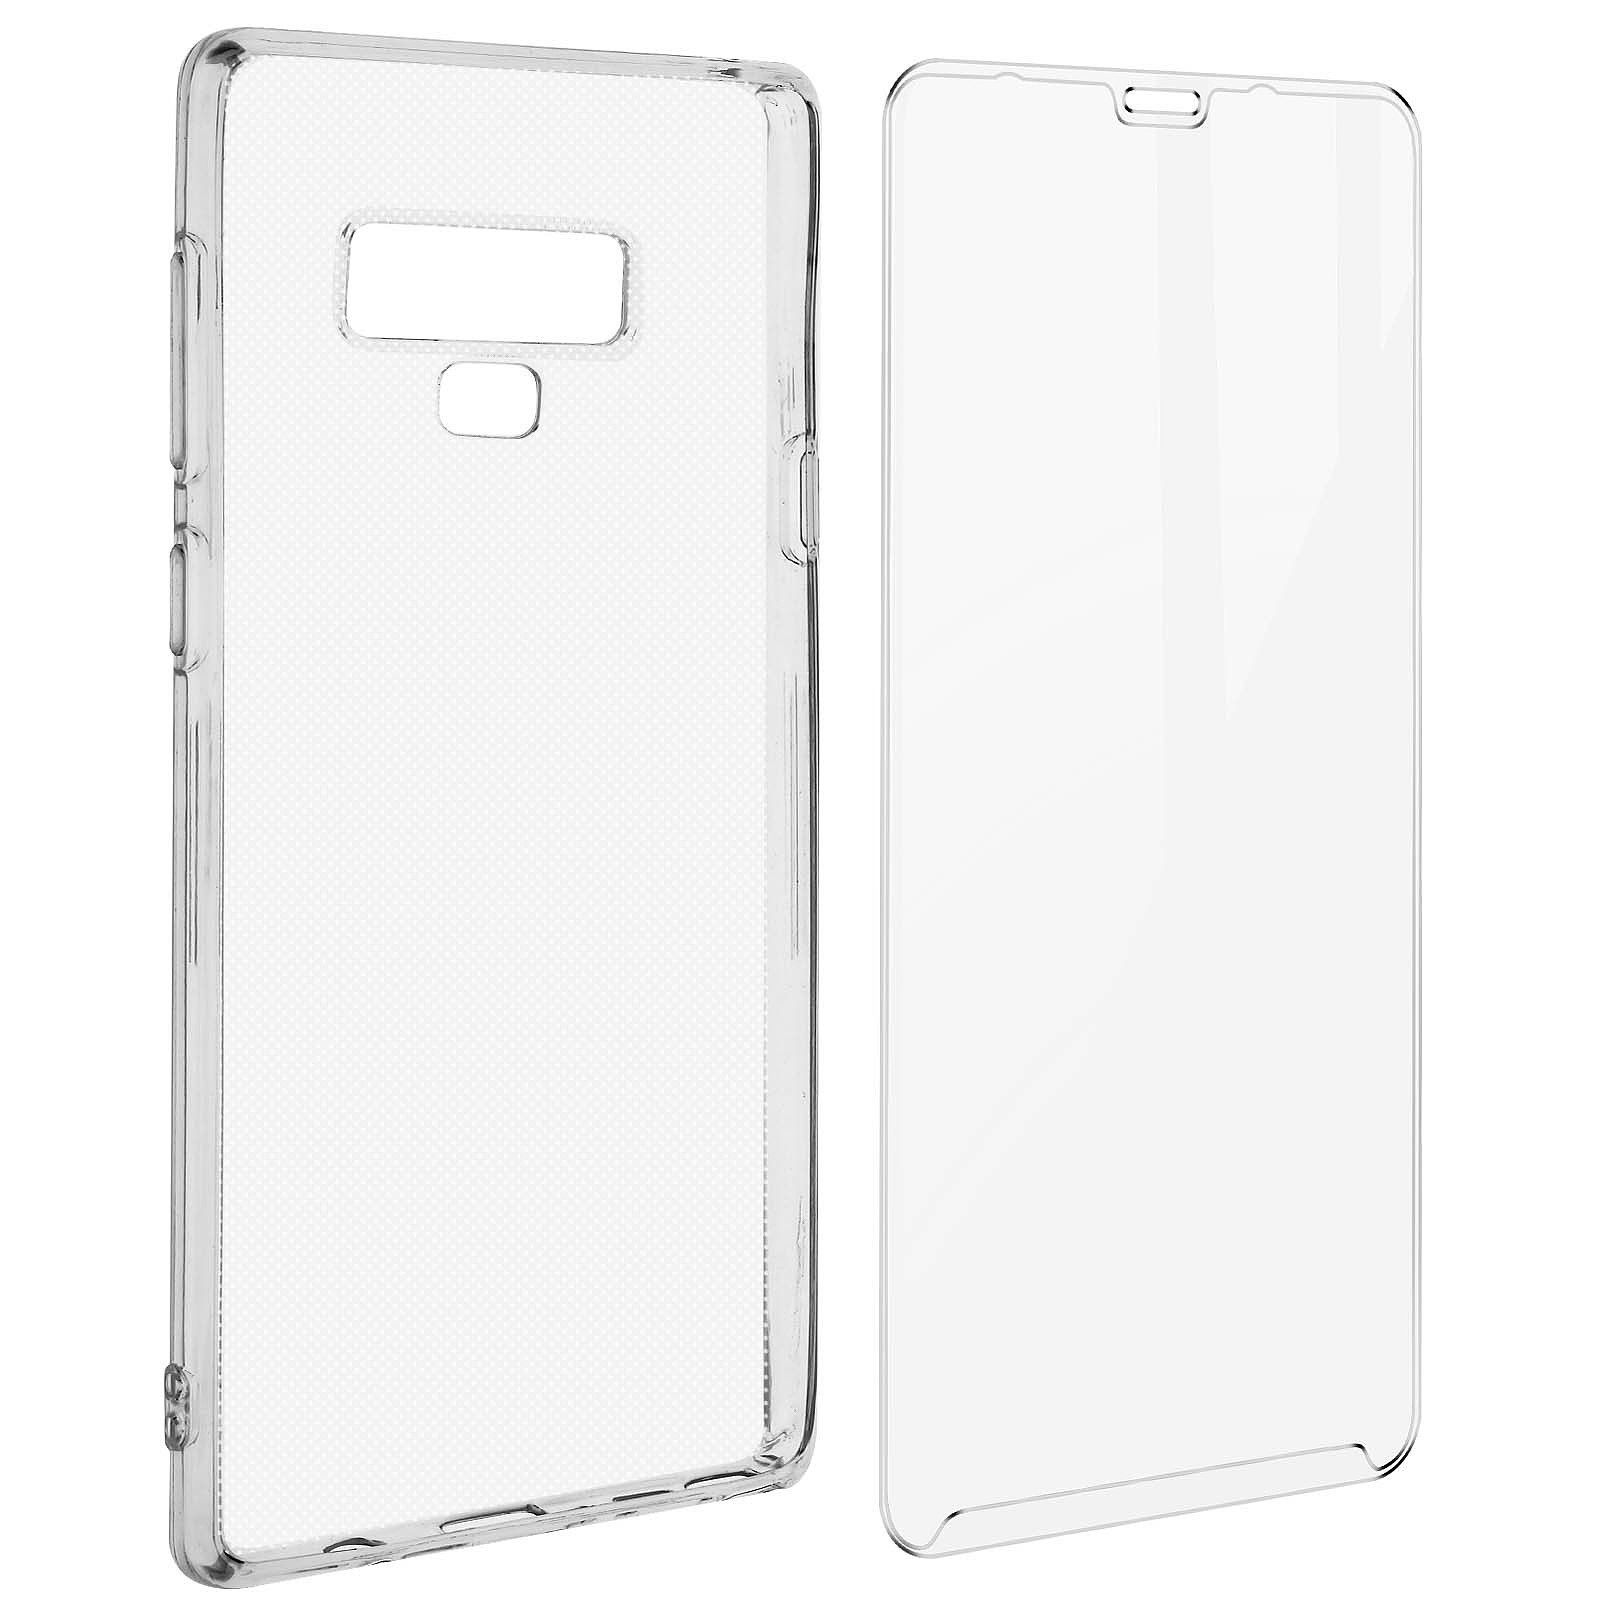 Avizar Coque pour Samsung Galaxy Note 9 Silicone Souple et Film Verre Trempe Durete 9H Transparent - Coque telephone Avizar